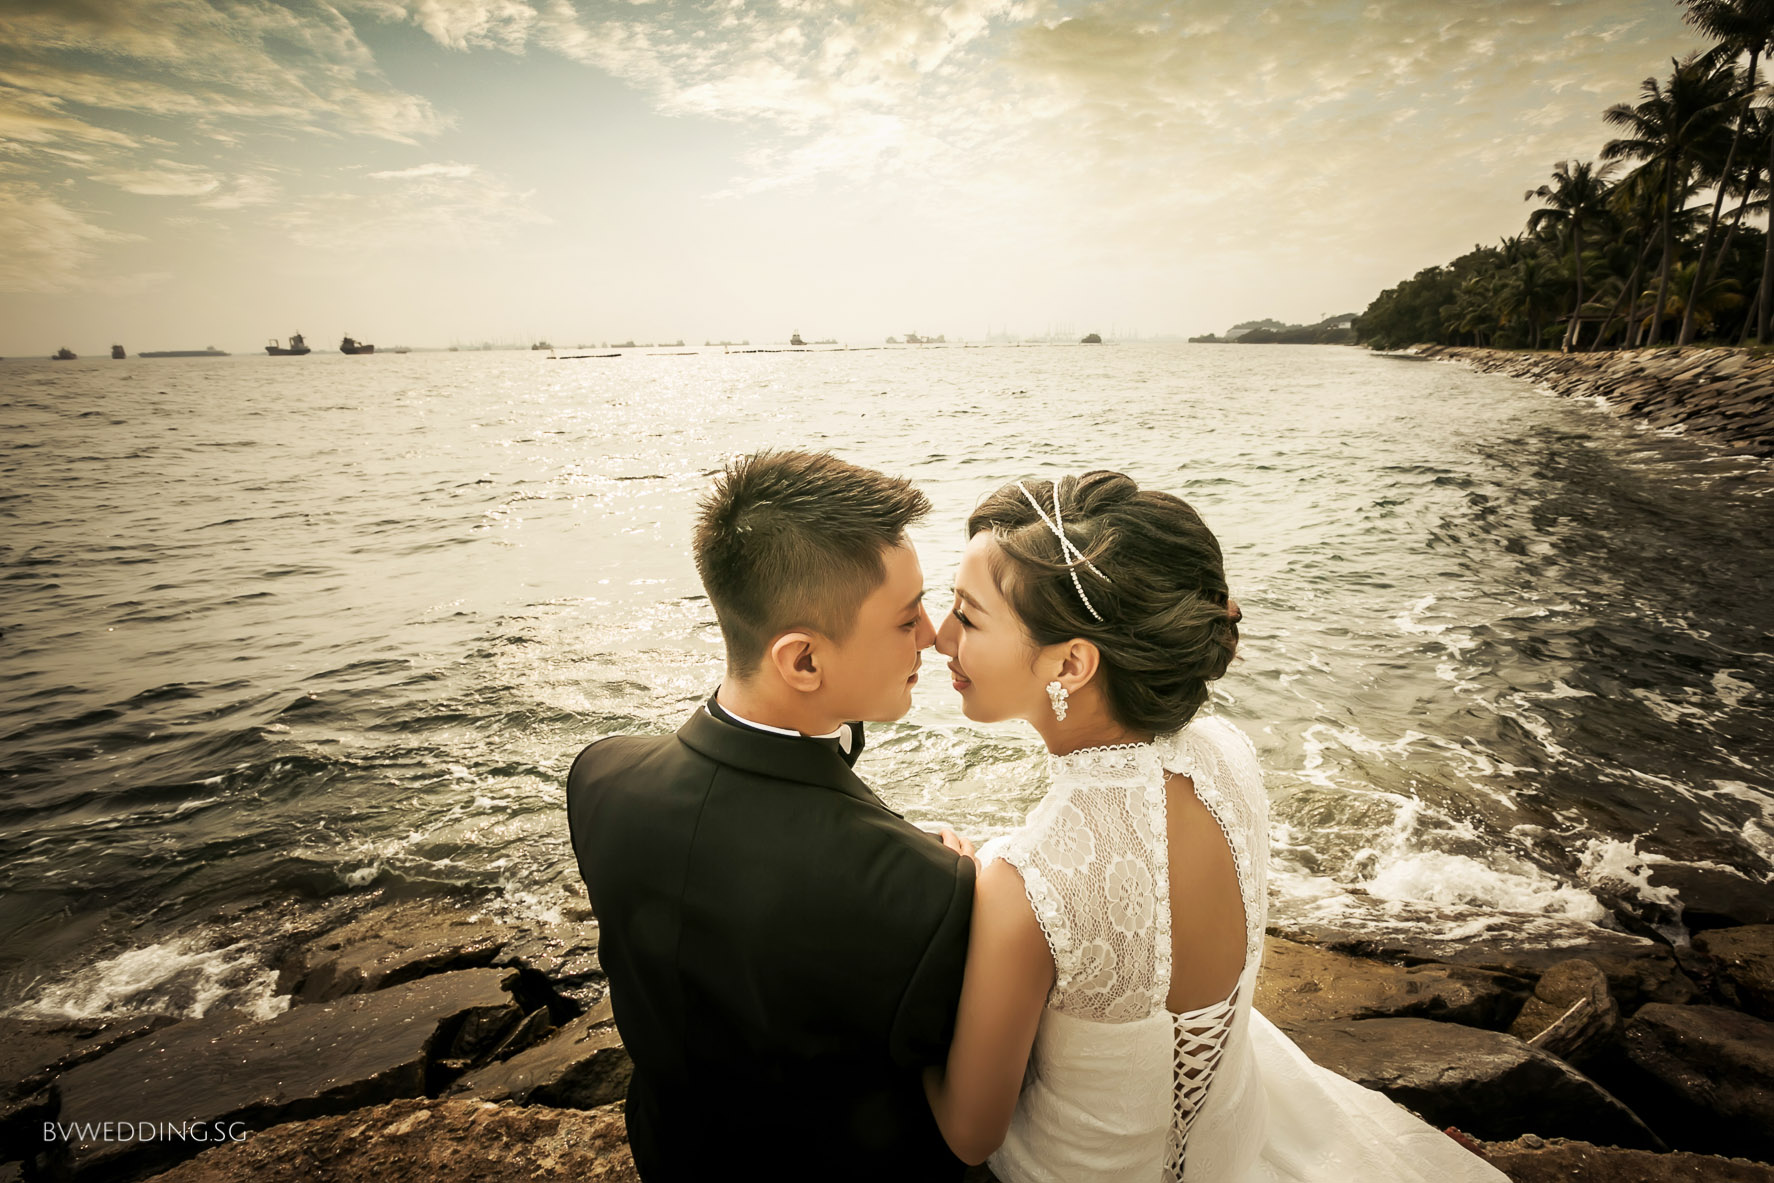 Pre-wedding Photoshoot at sentosa beach